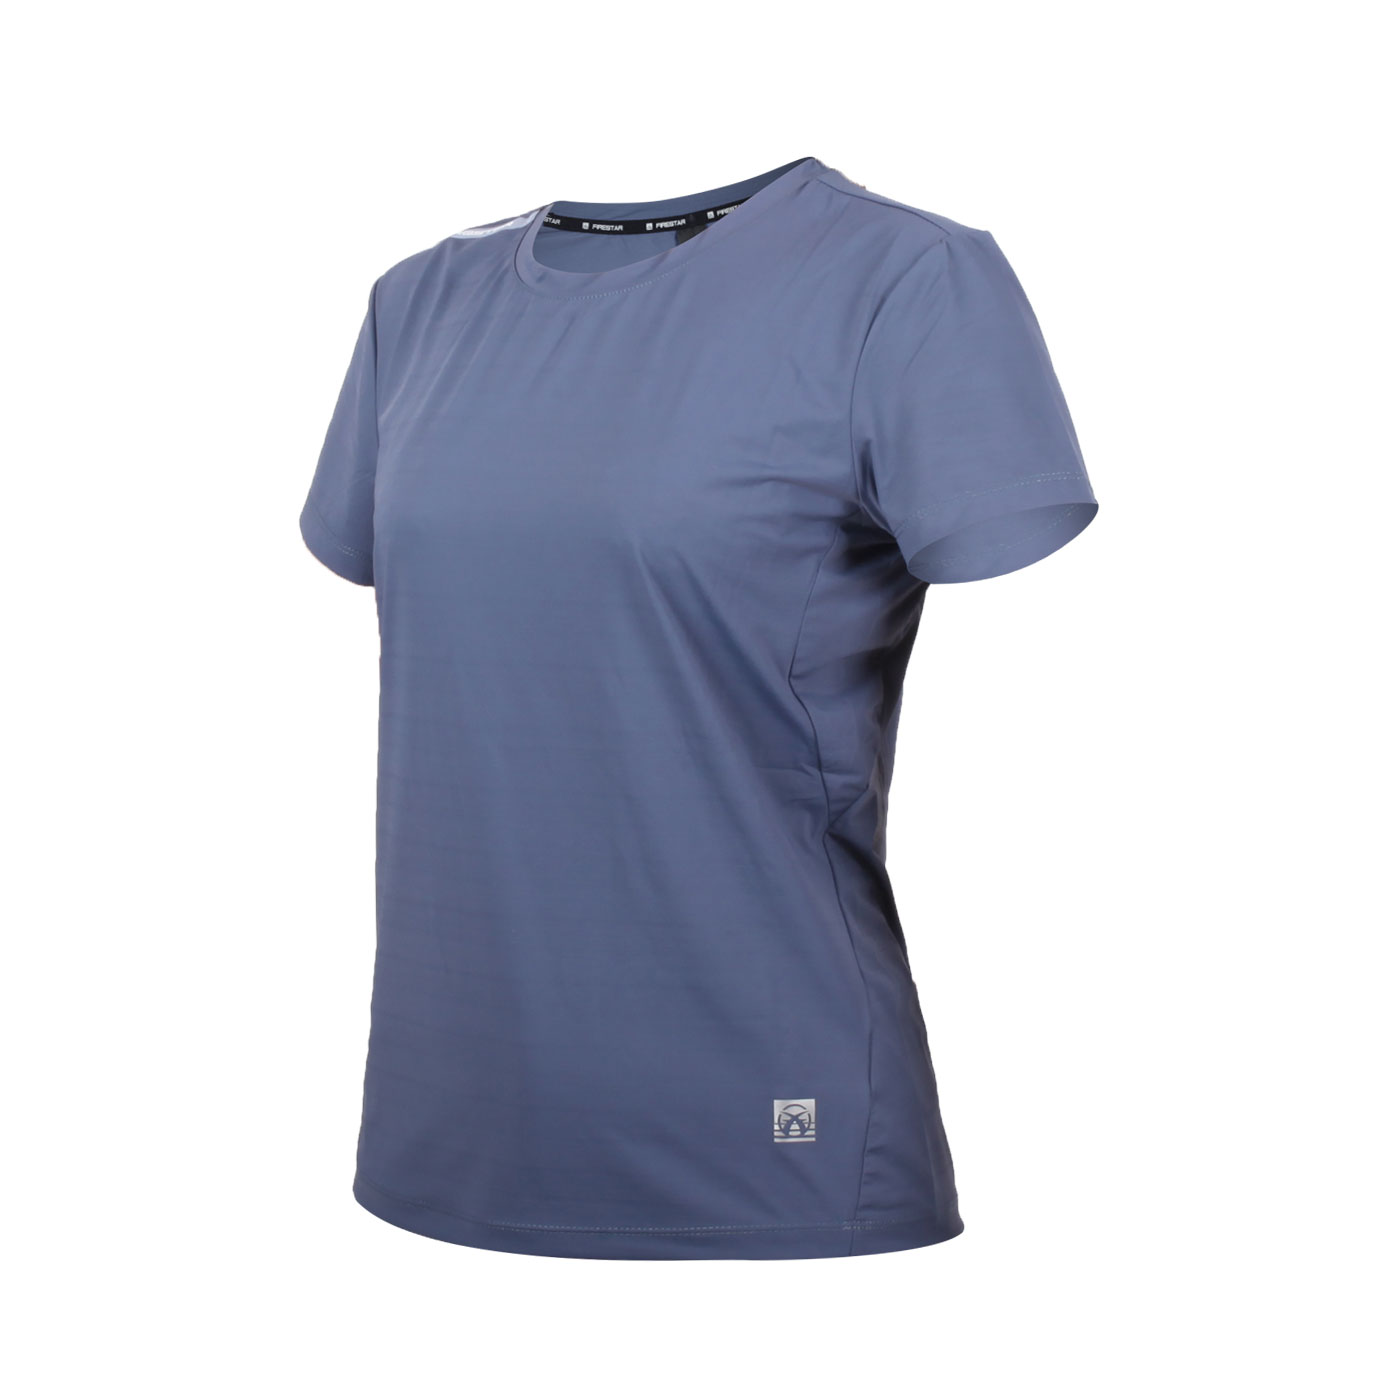 FIRESTAR 女款彈性印花短袖T恤  DL363-13 - 靛灰白